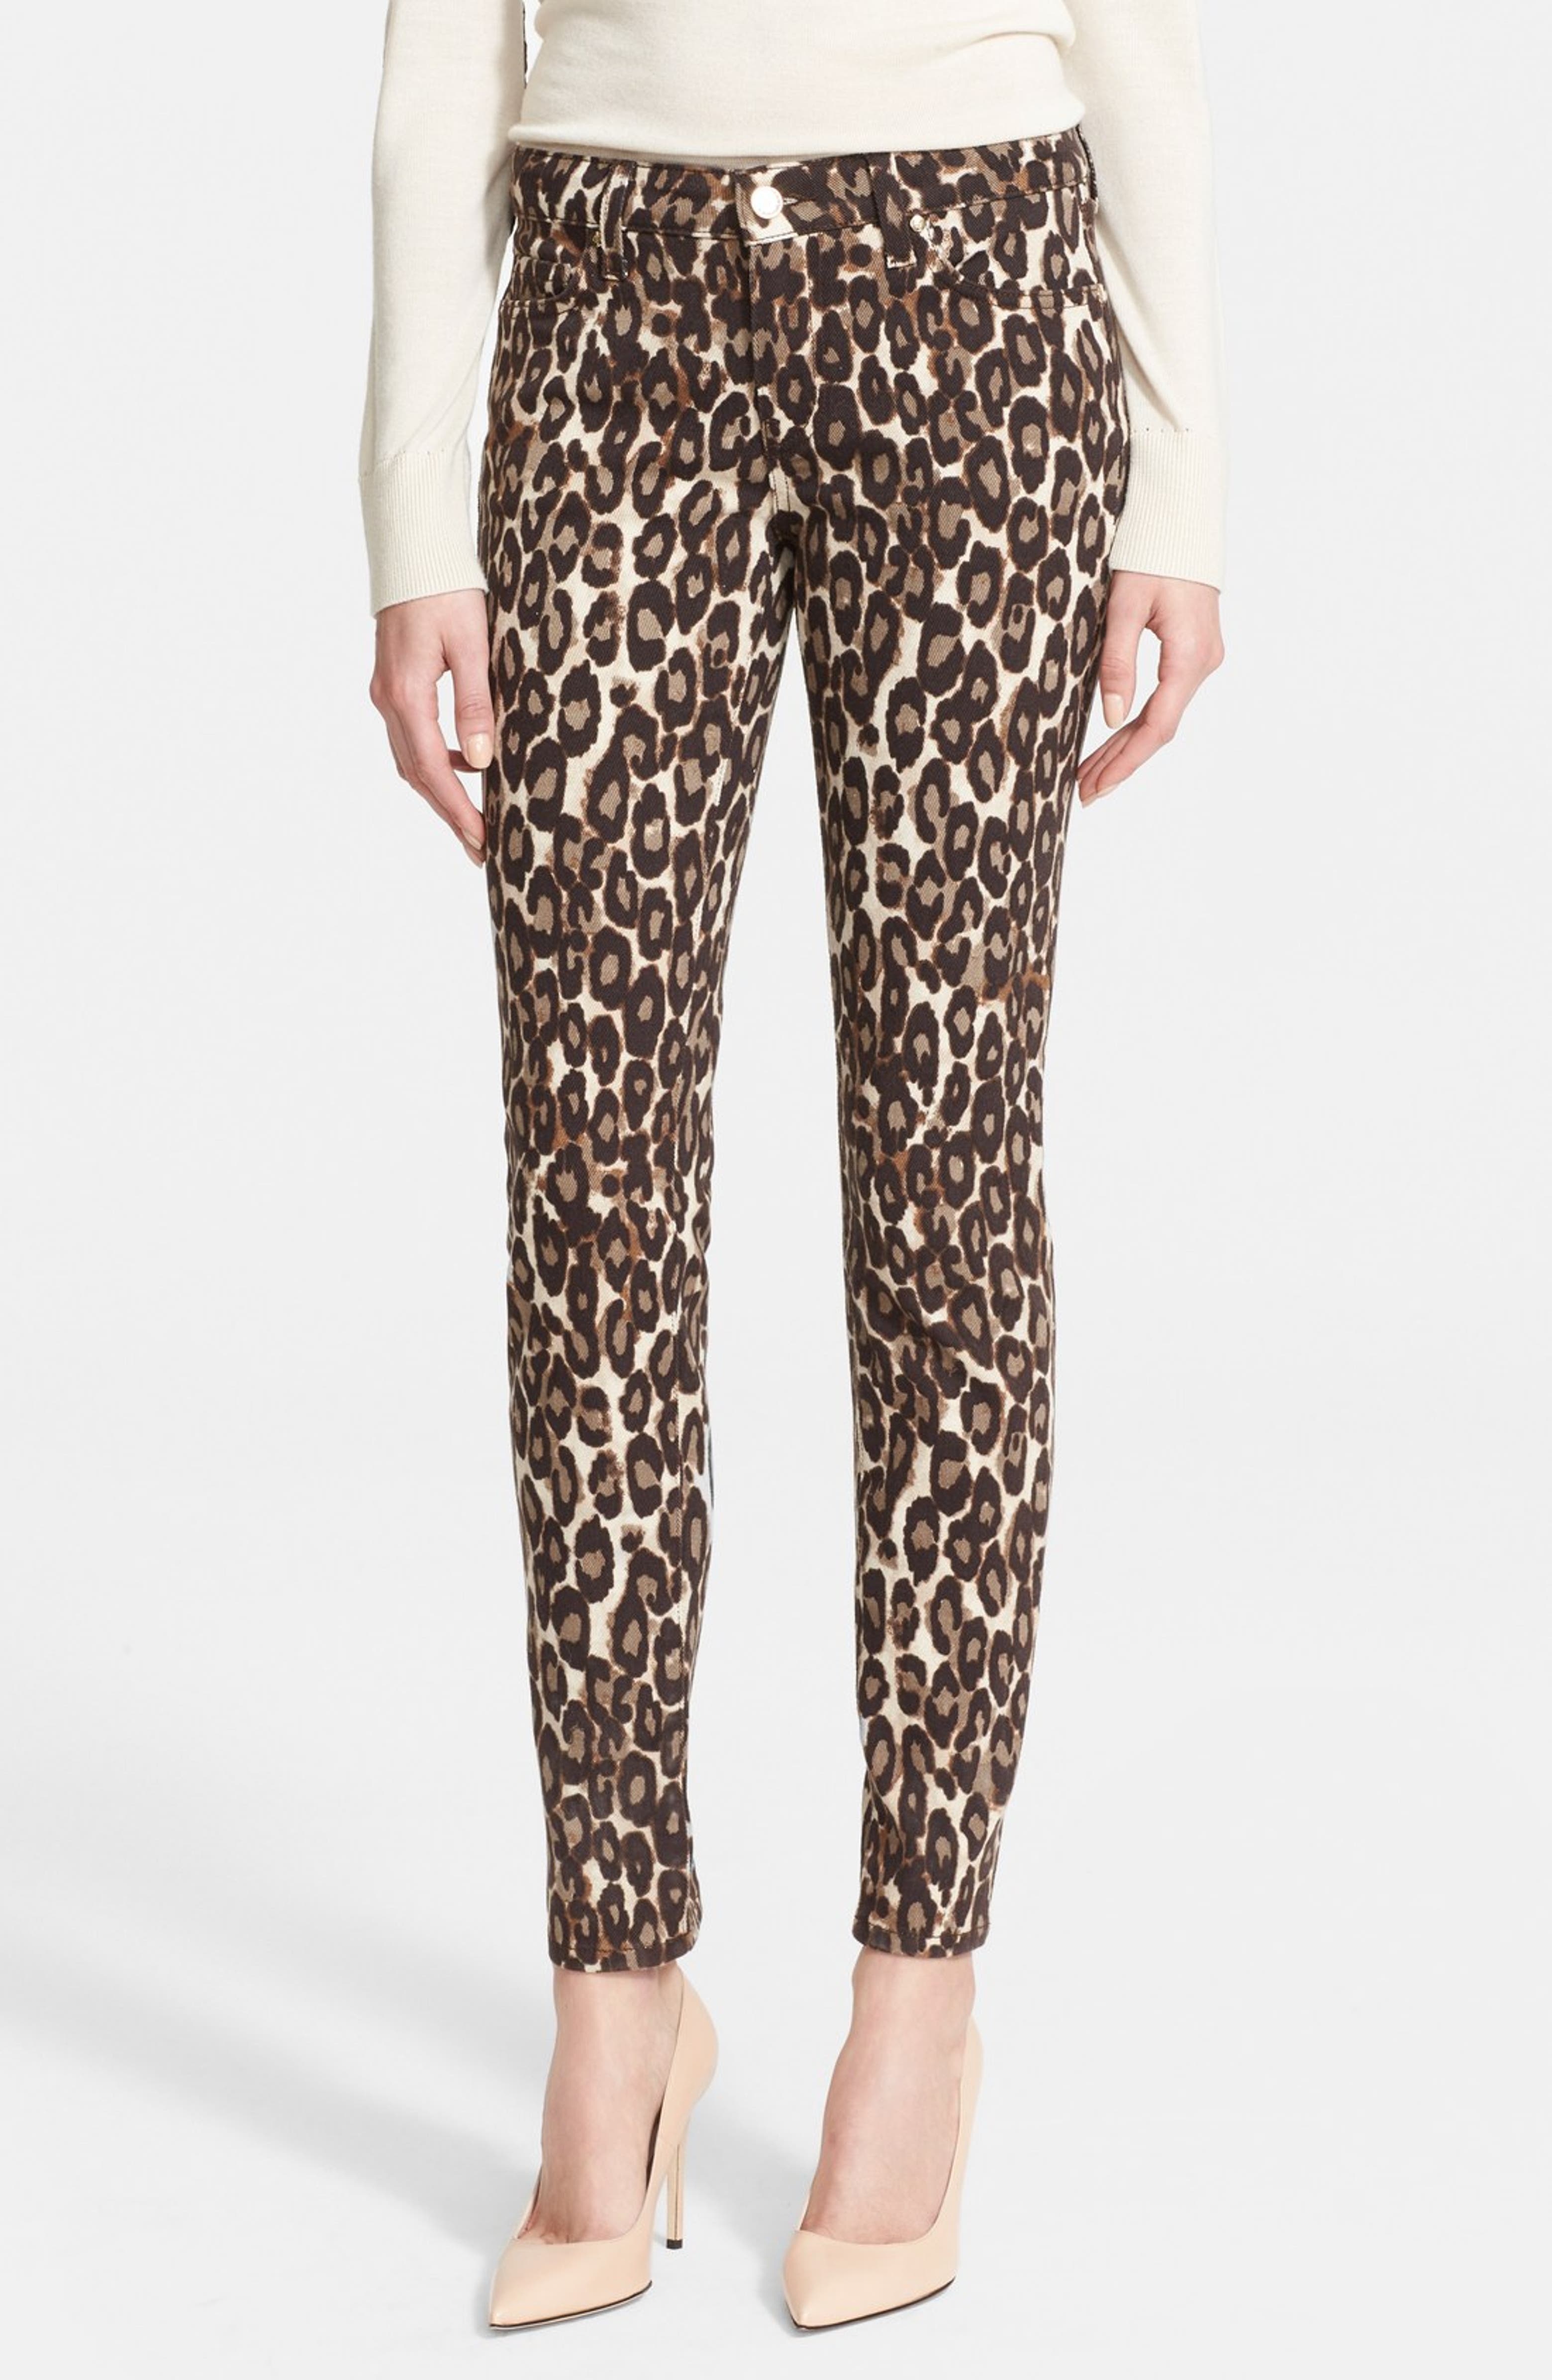 kate spade new york 'broome street' leopard print jeans | Nordstrom